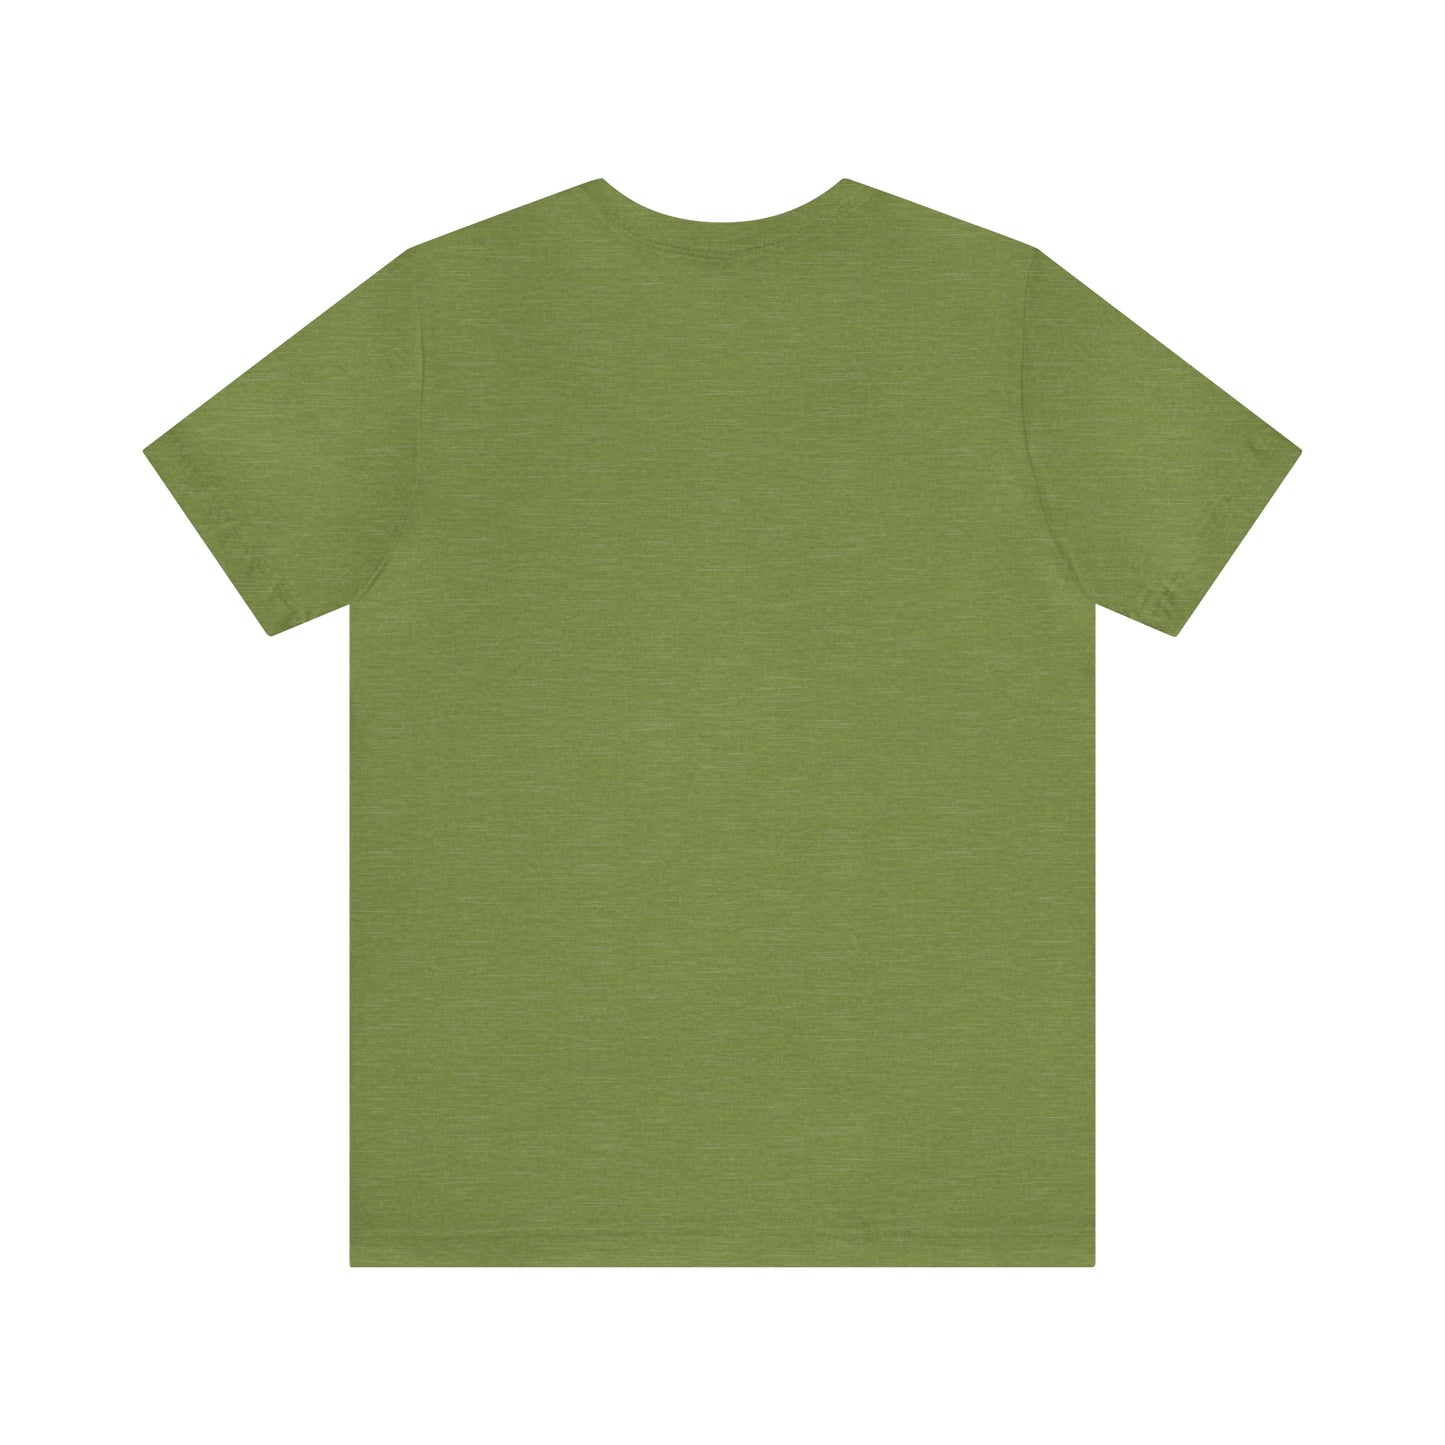 Cottagecore Clothing, Mushroom Tarot Boho Y2k Crew Neck T-Shirt